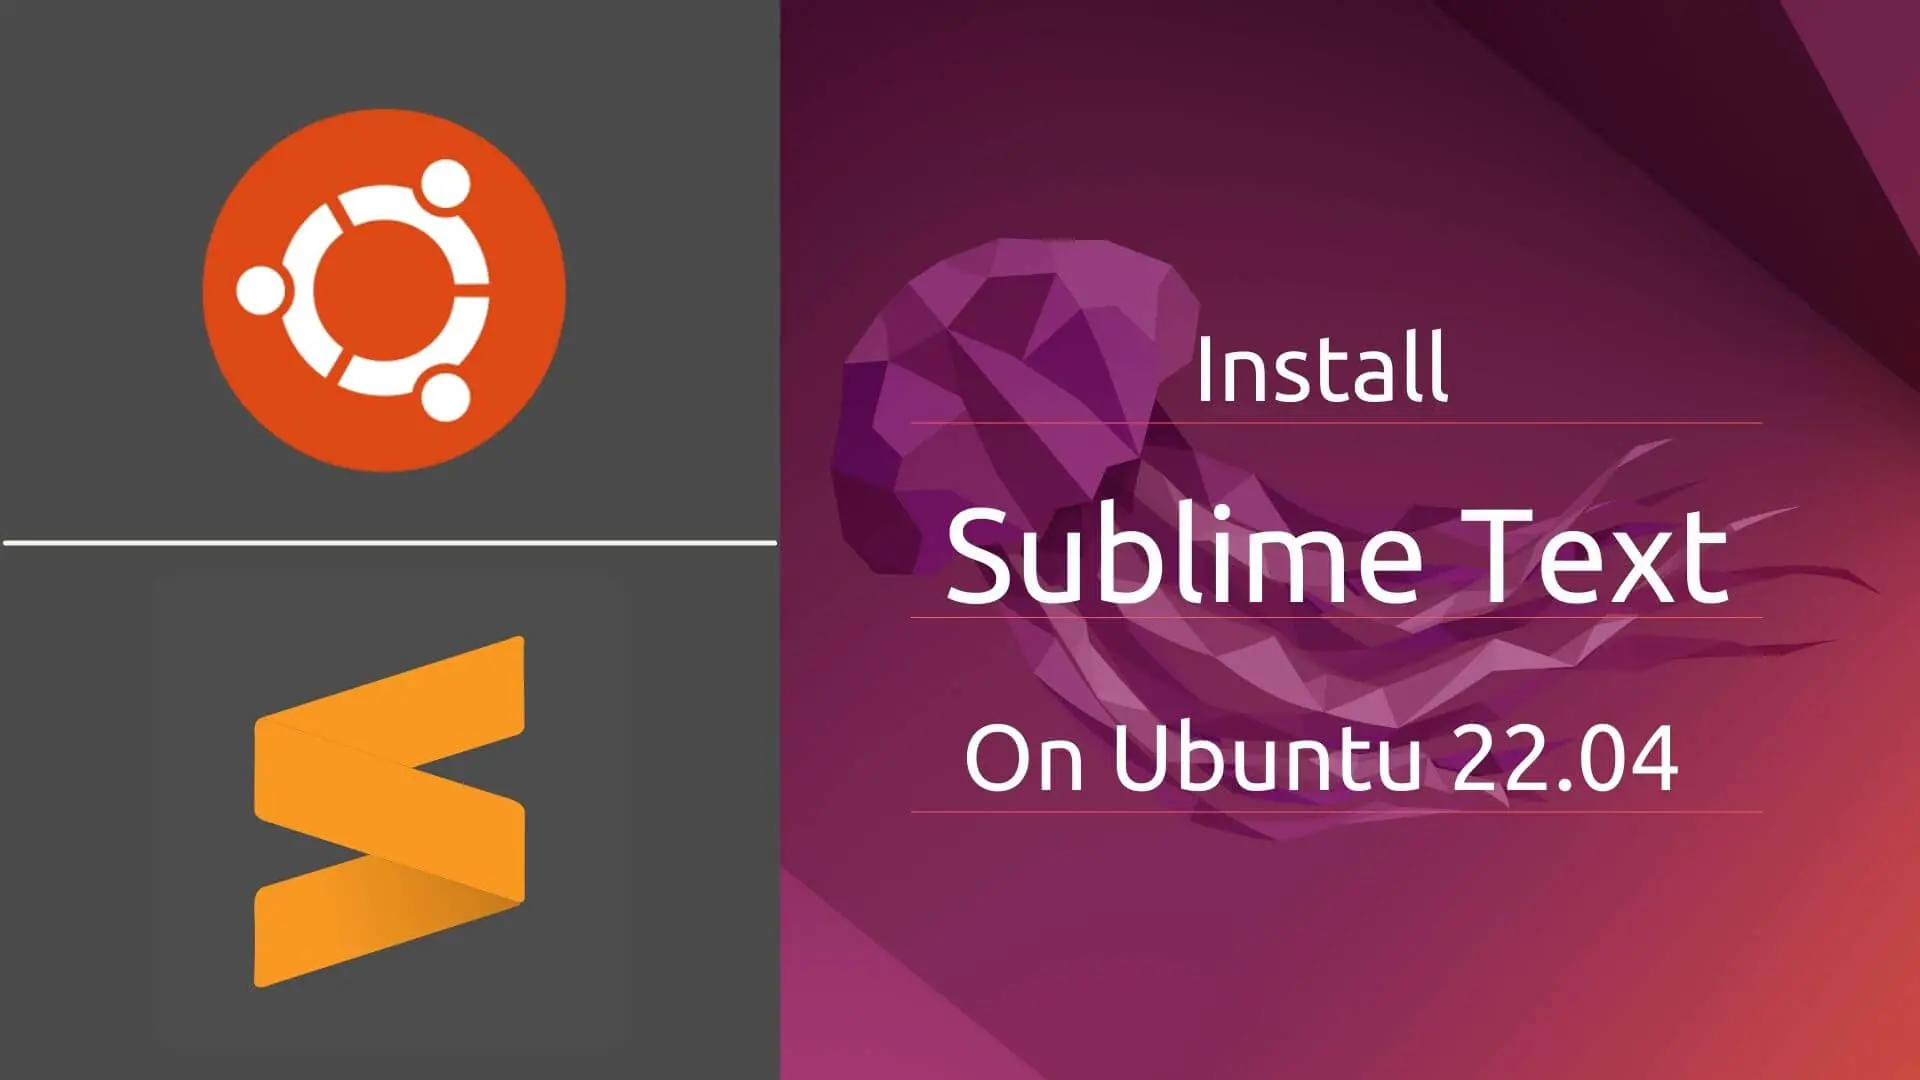 Install Sublime Text on Ubuntu 22.04